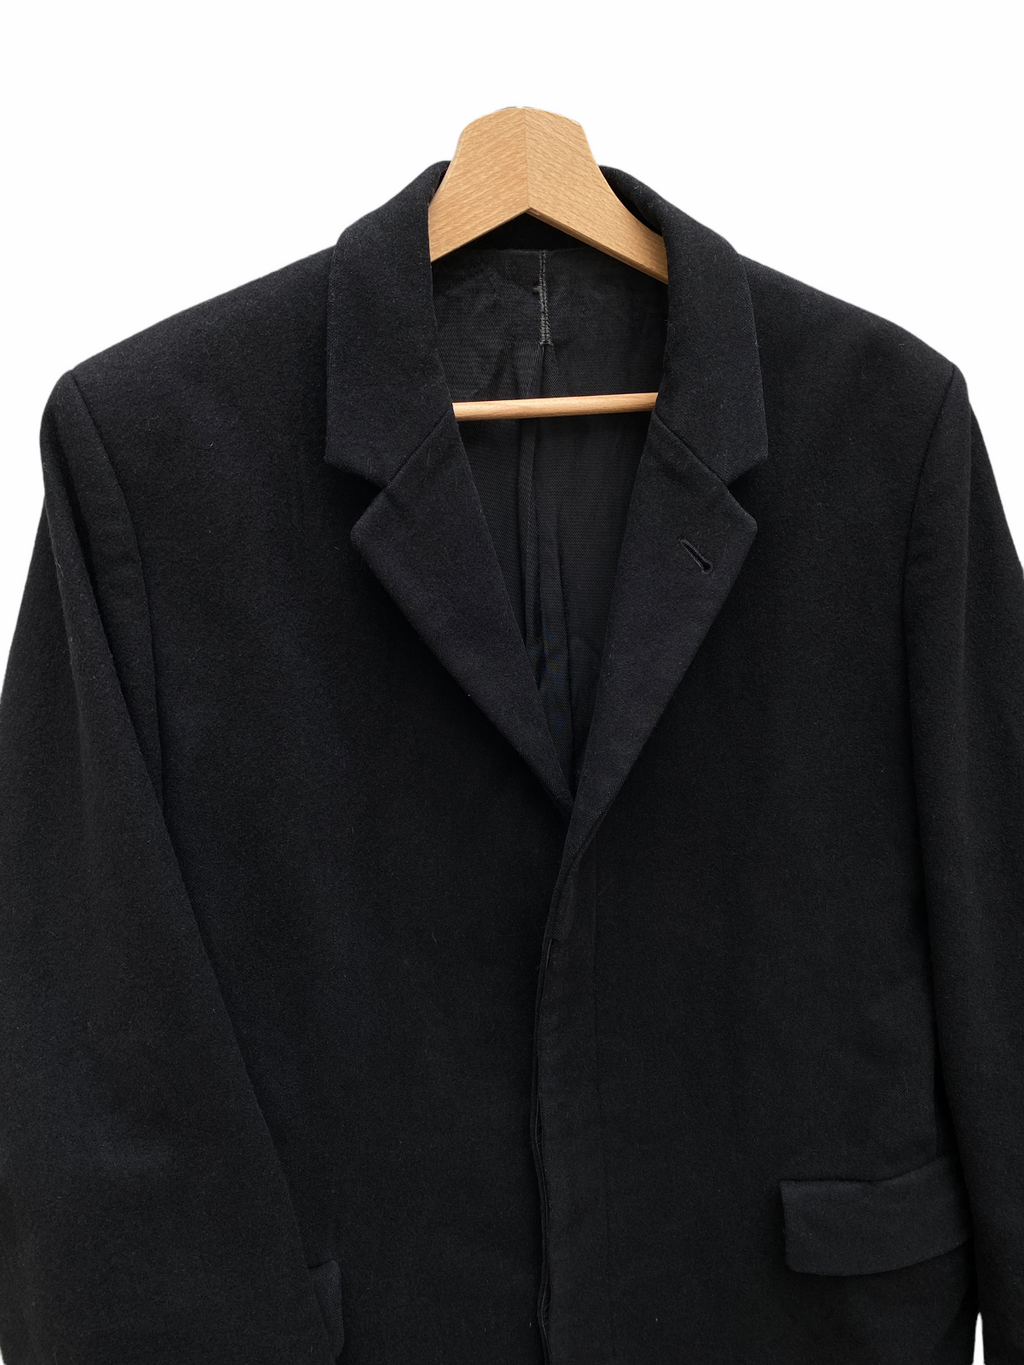 Black wool Coat Jacket